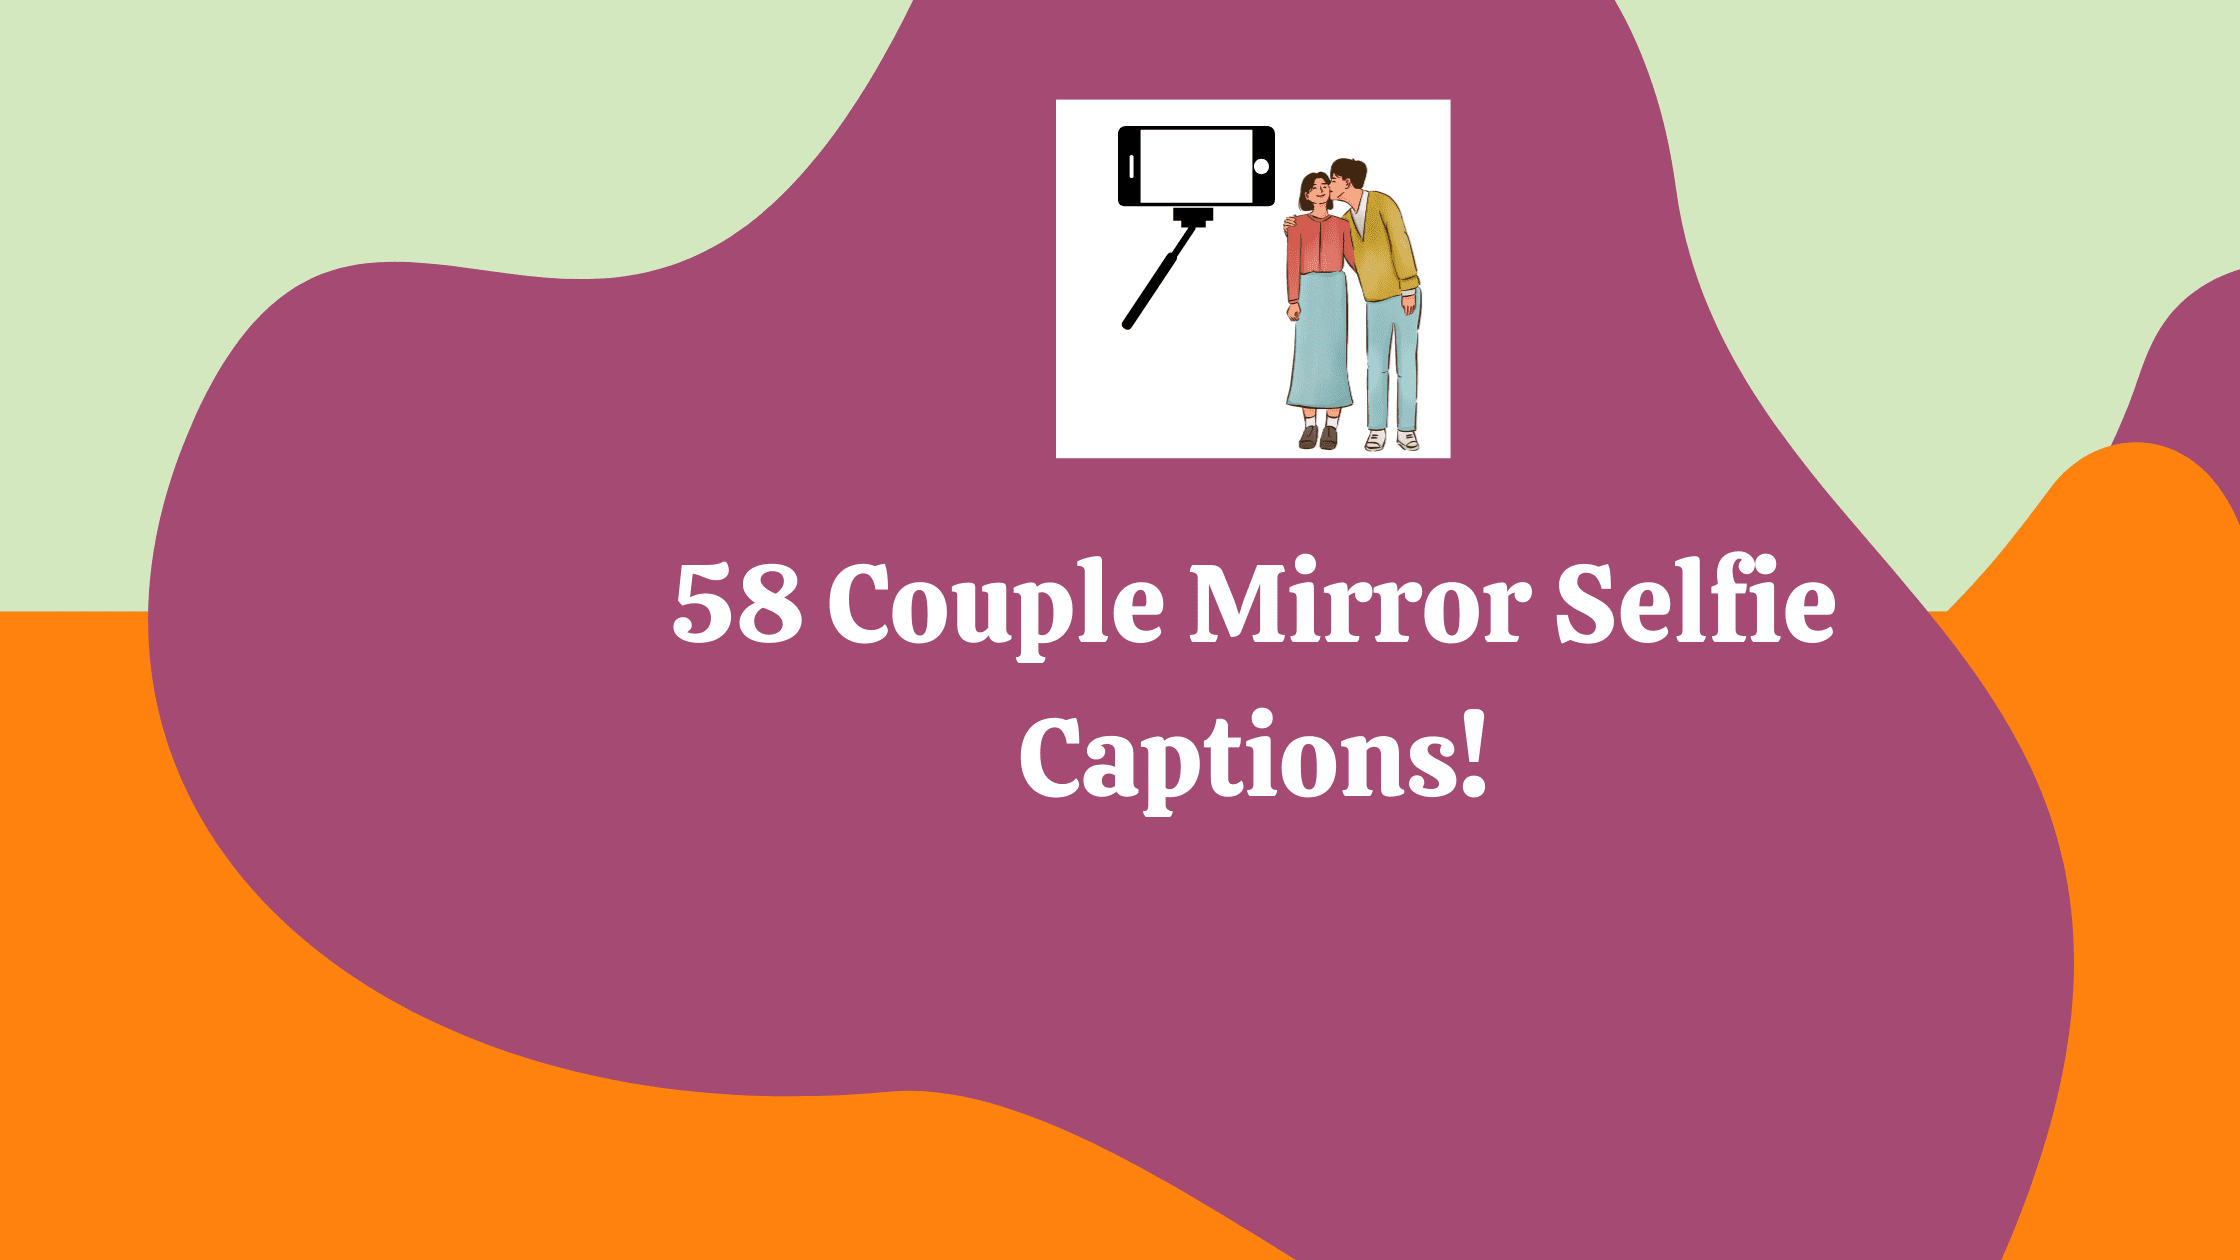 57 Attractive Caption For Couple Mirror Selfie 